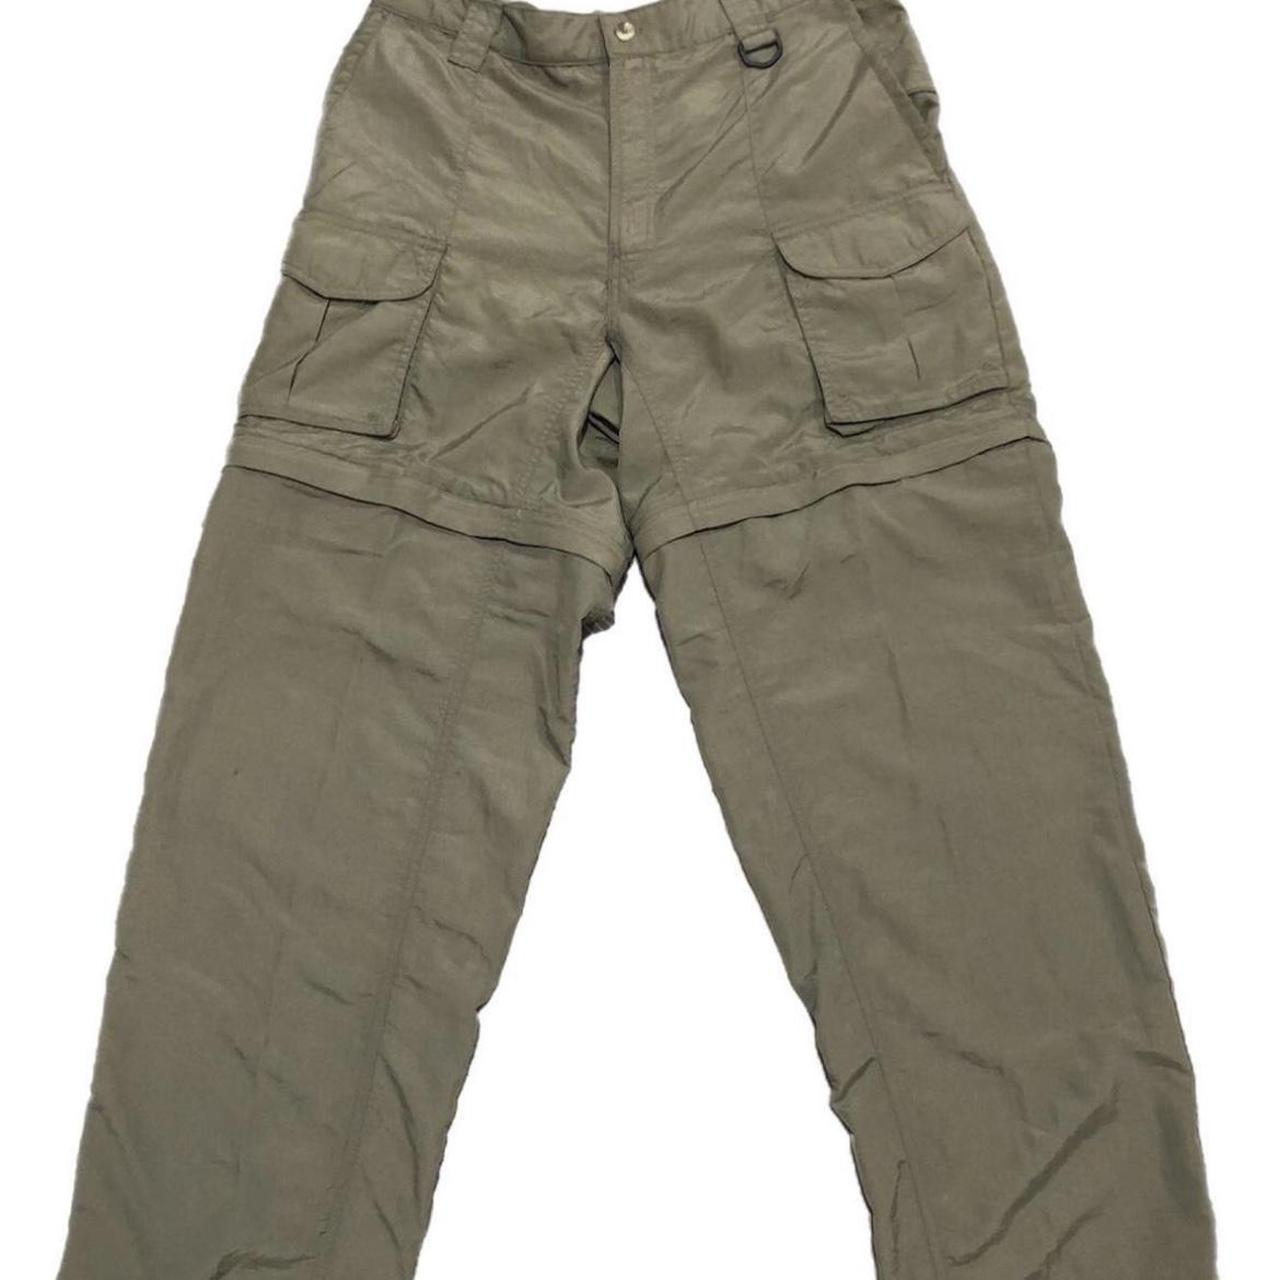 Columbia Sportswear Men's Cargo Pants - Khaki - M